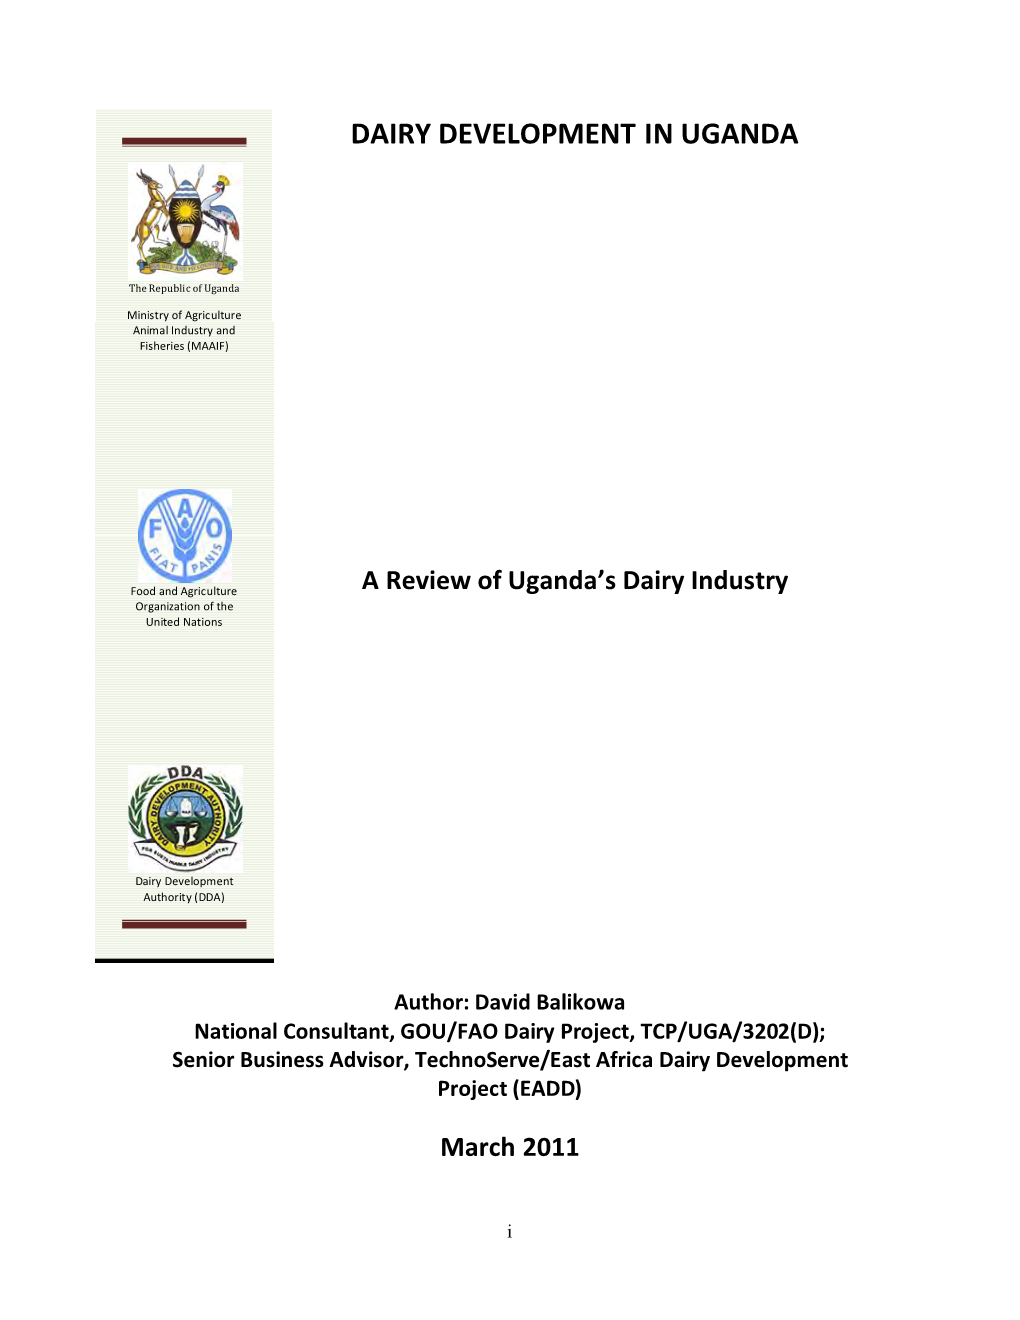 Dairy Development in Uganda